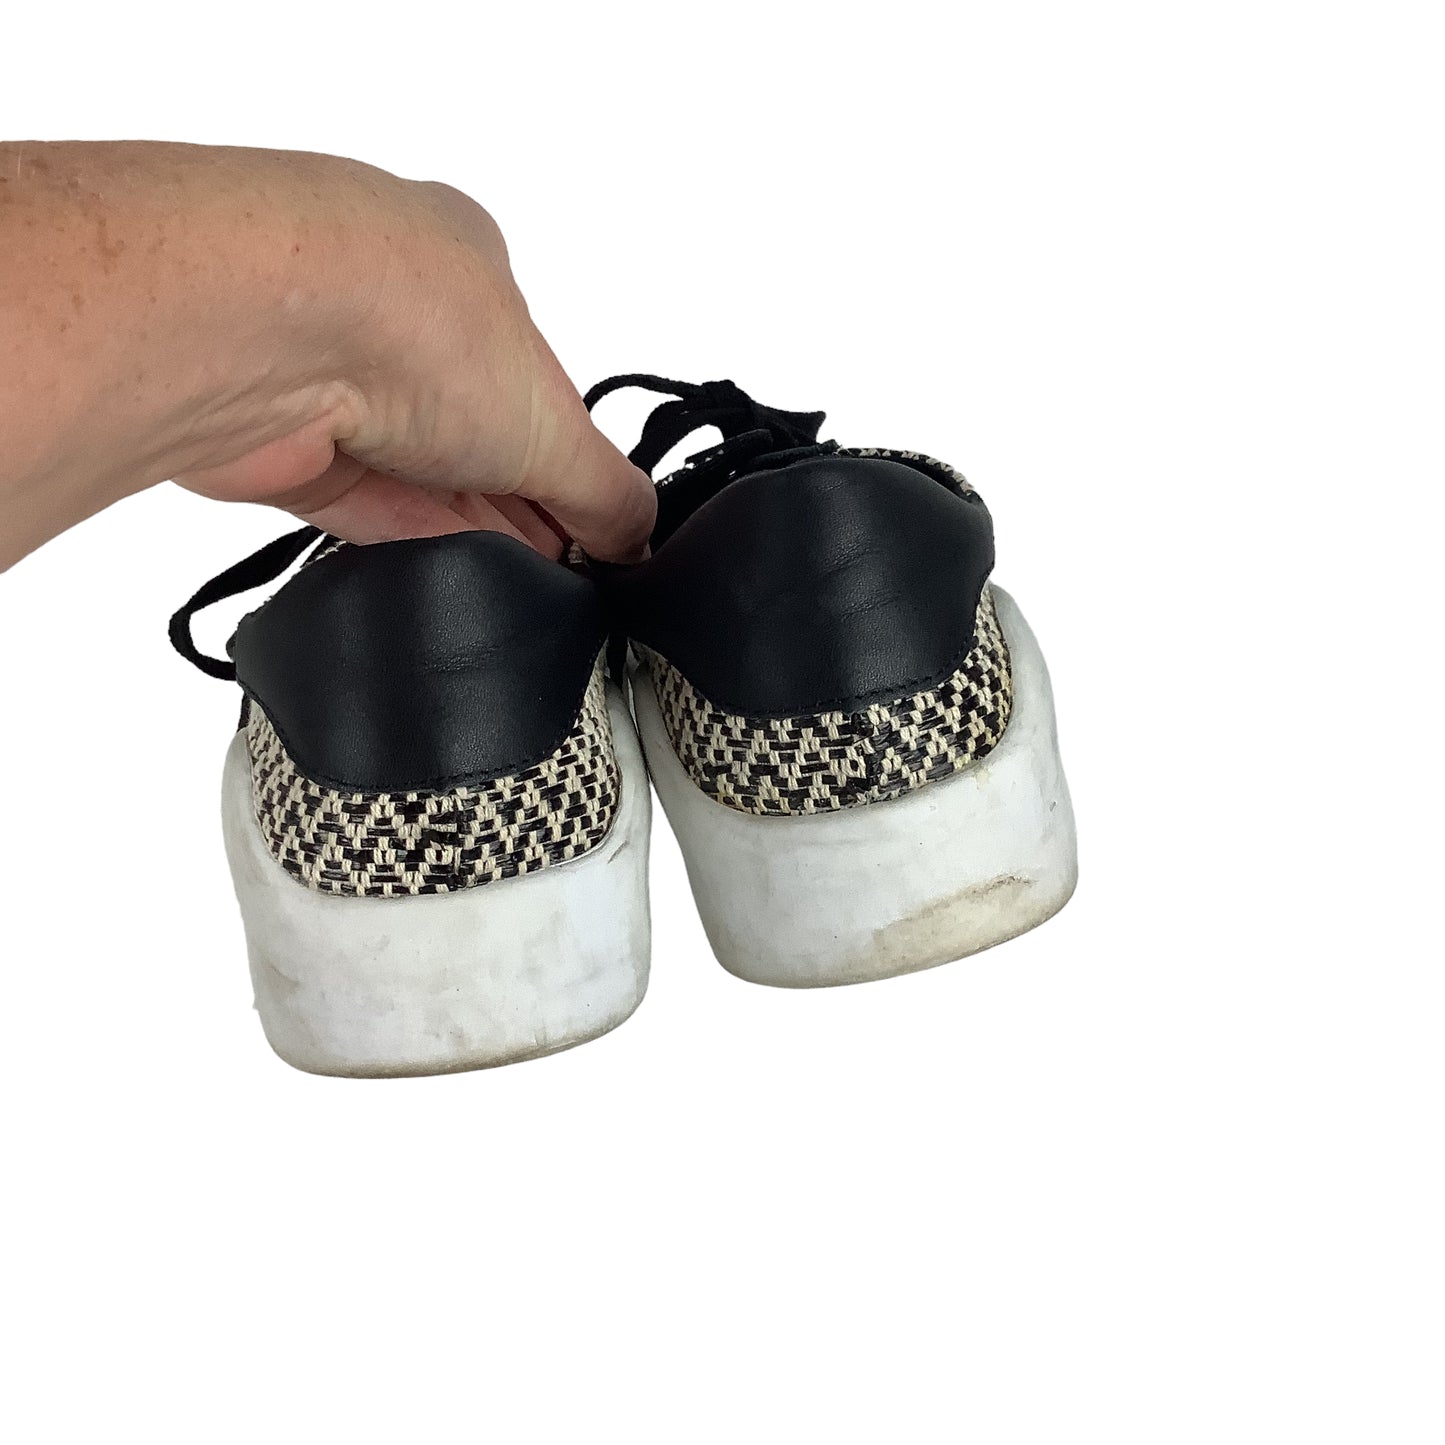 Shoes Sneakers By Kelsi Dagger  Size: 8.5